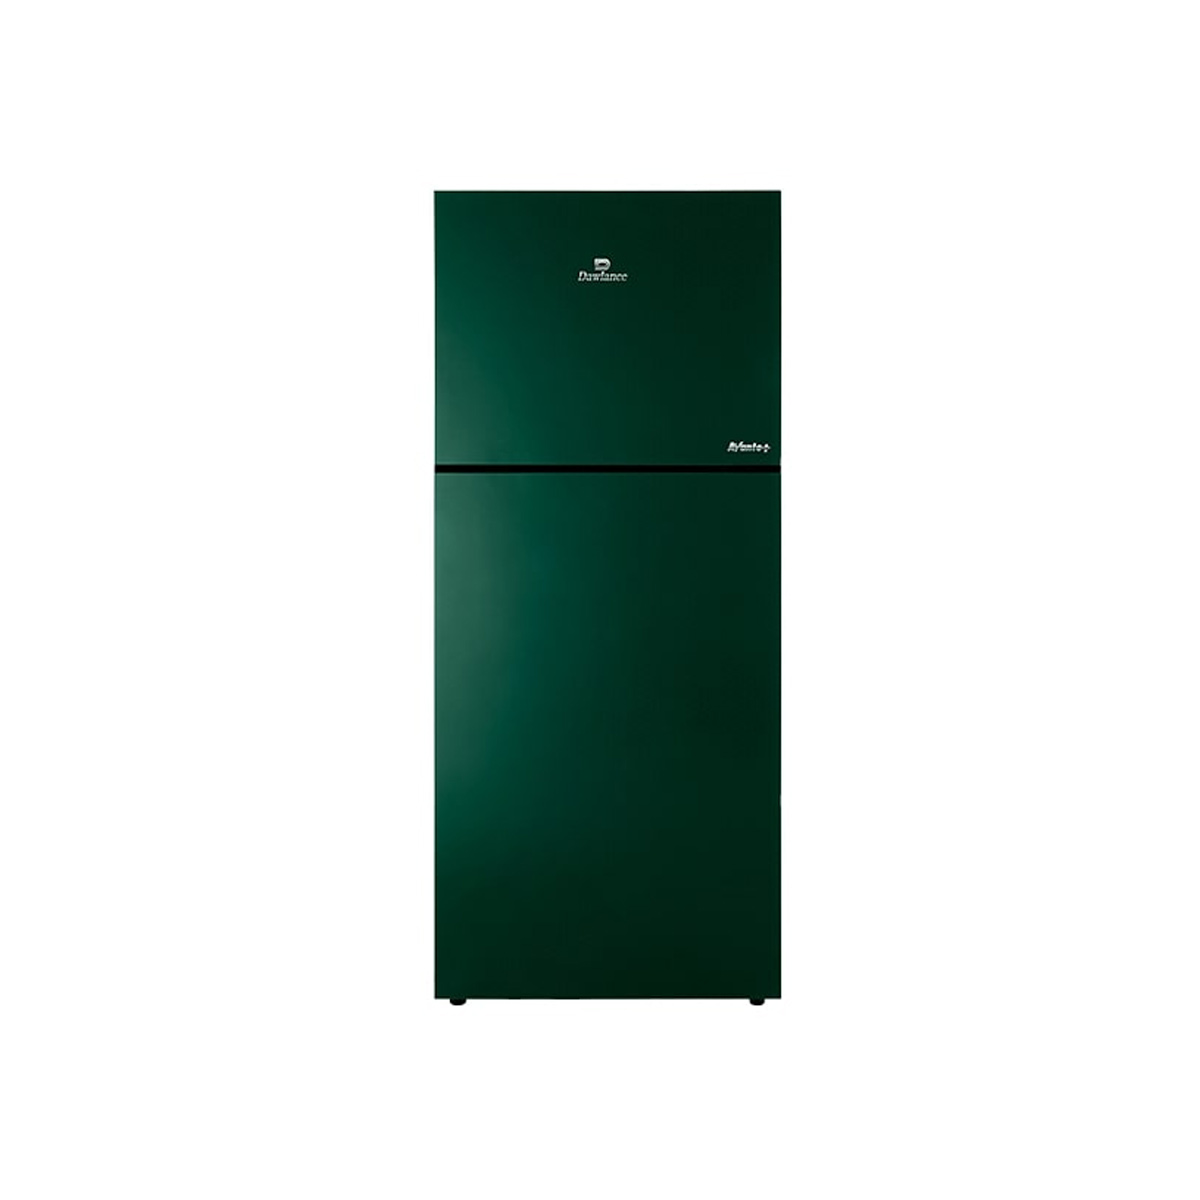 Dawlance 9193 WB Avante+ Refrigerator